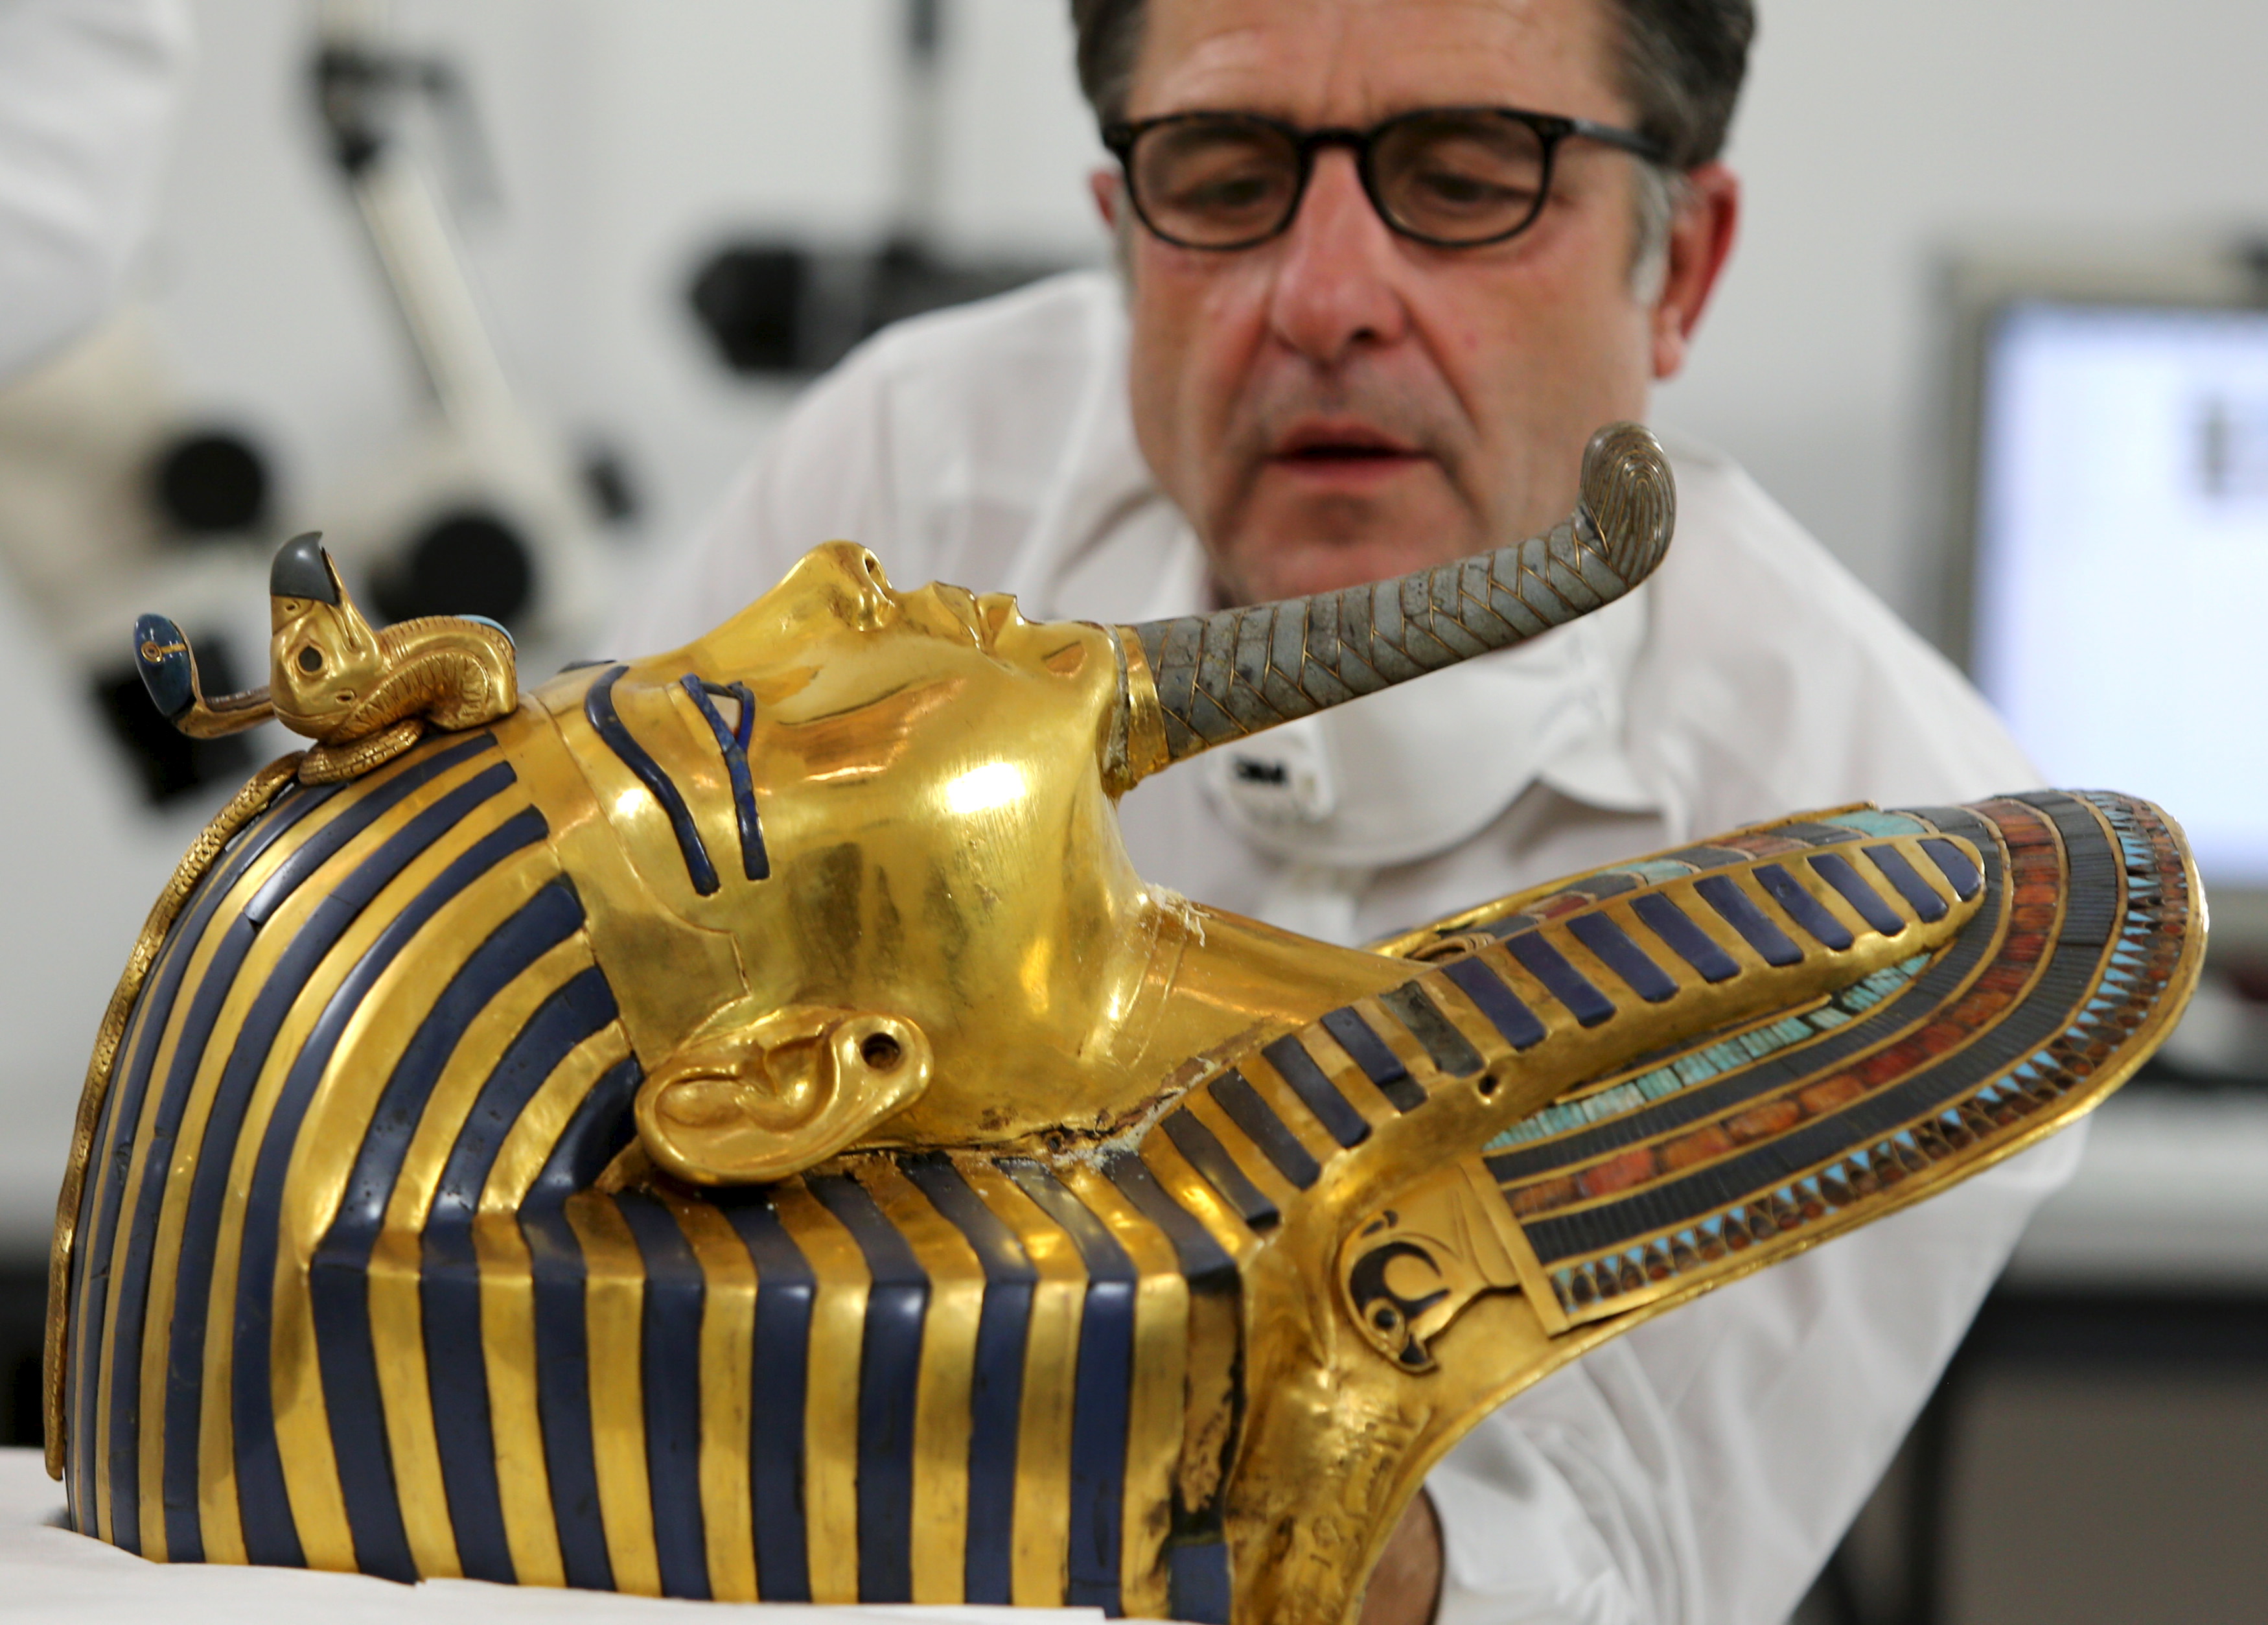 King Tut mask, broken beard restored, goes back on display - CBS News